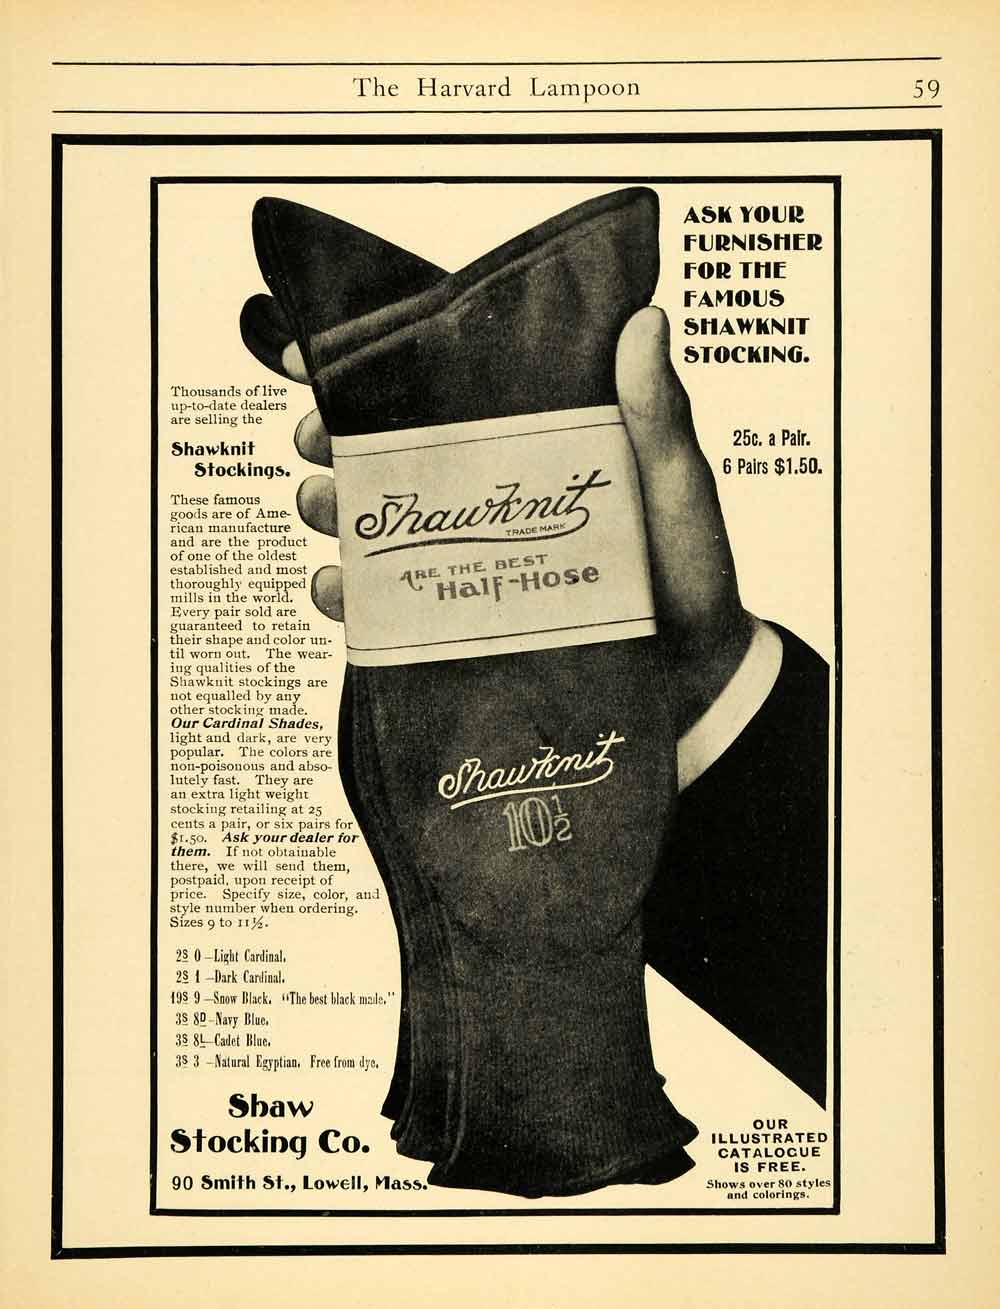 1900 Ad Shaw Stocking Shawknit 90 Smith St Lowell Half-Hose Pantyhose HVD1